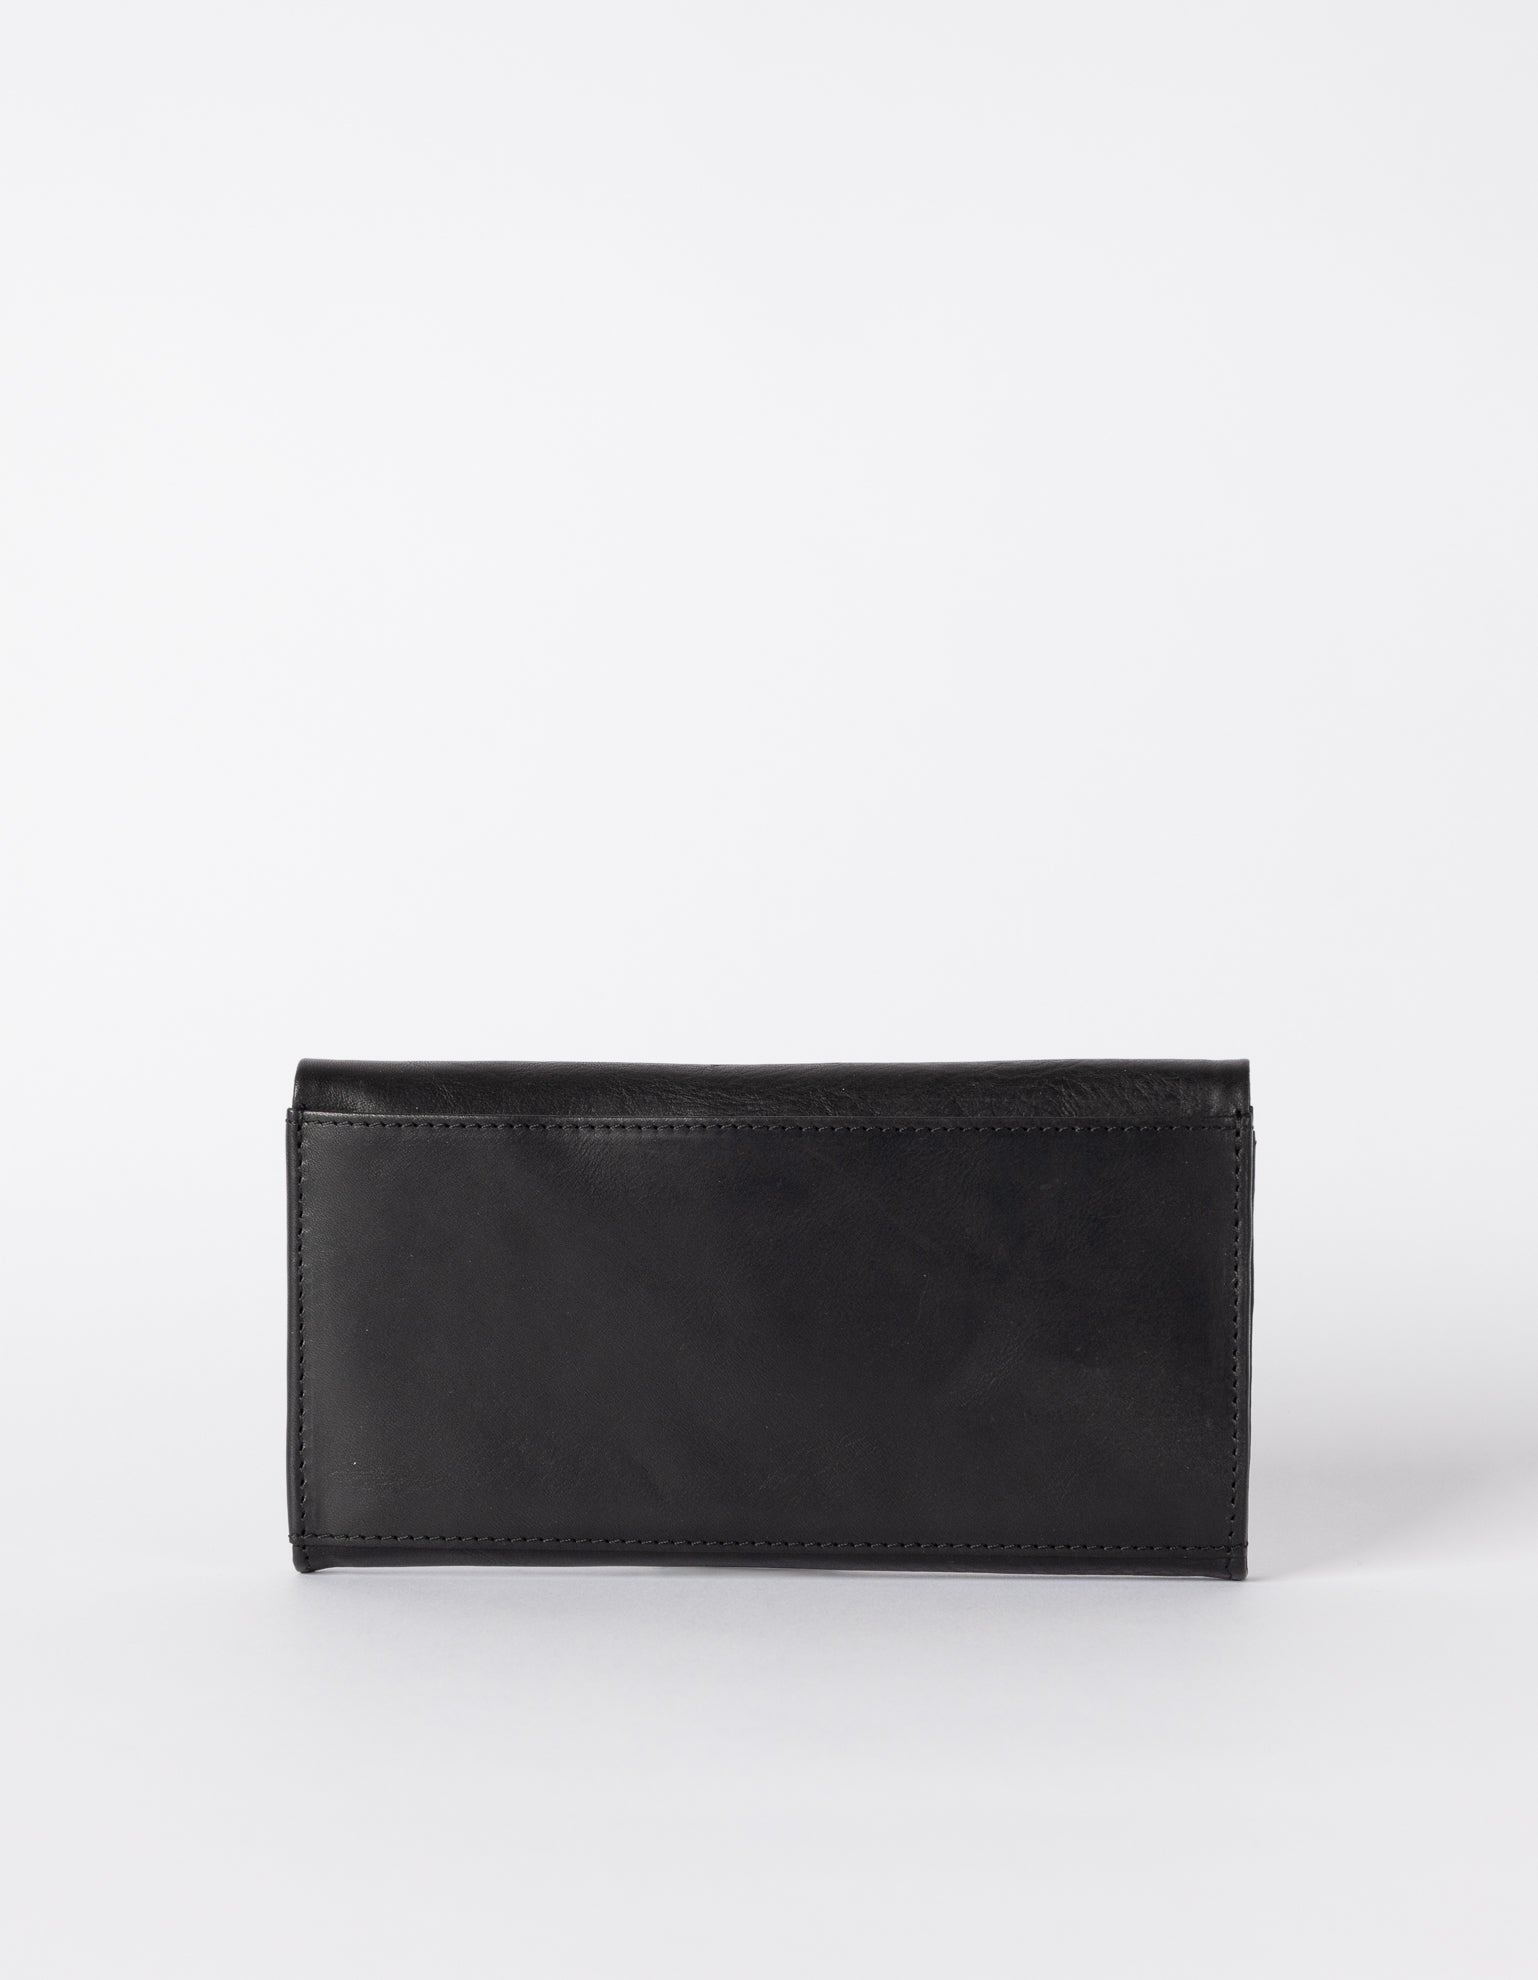 Pau Pouch Black Leather women’s purse. Rectangular shaped fold over wallet. Back model image.